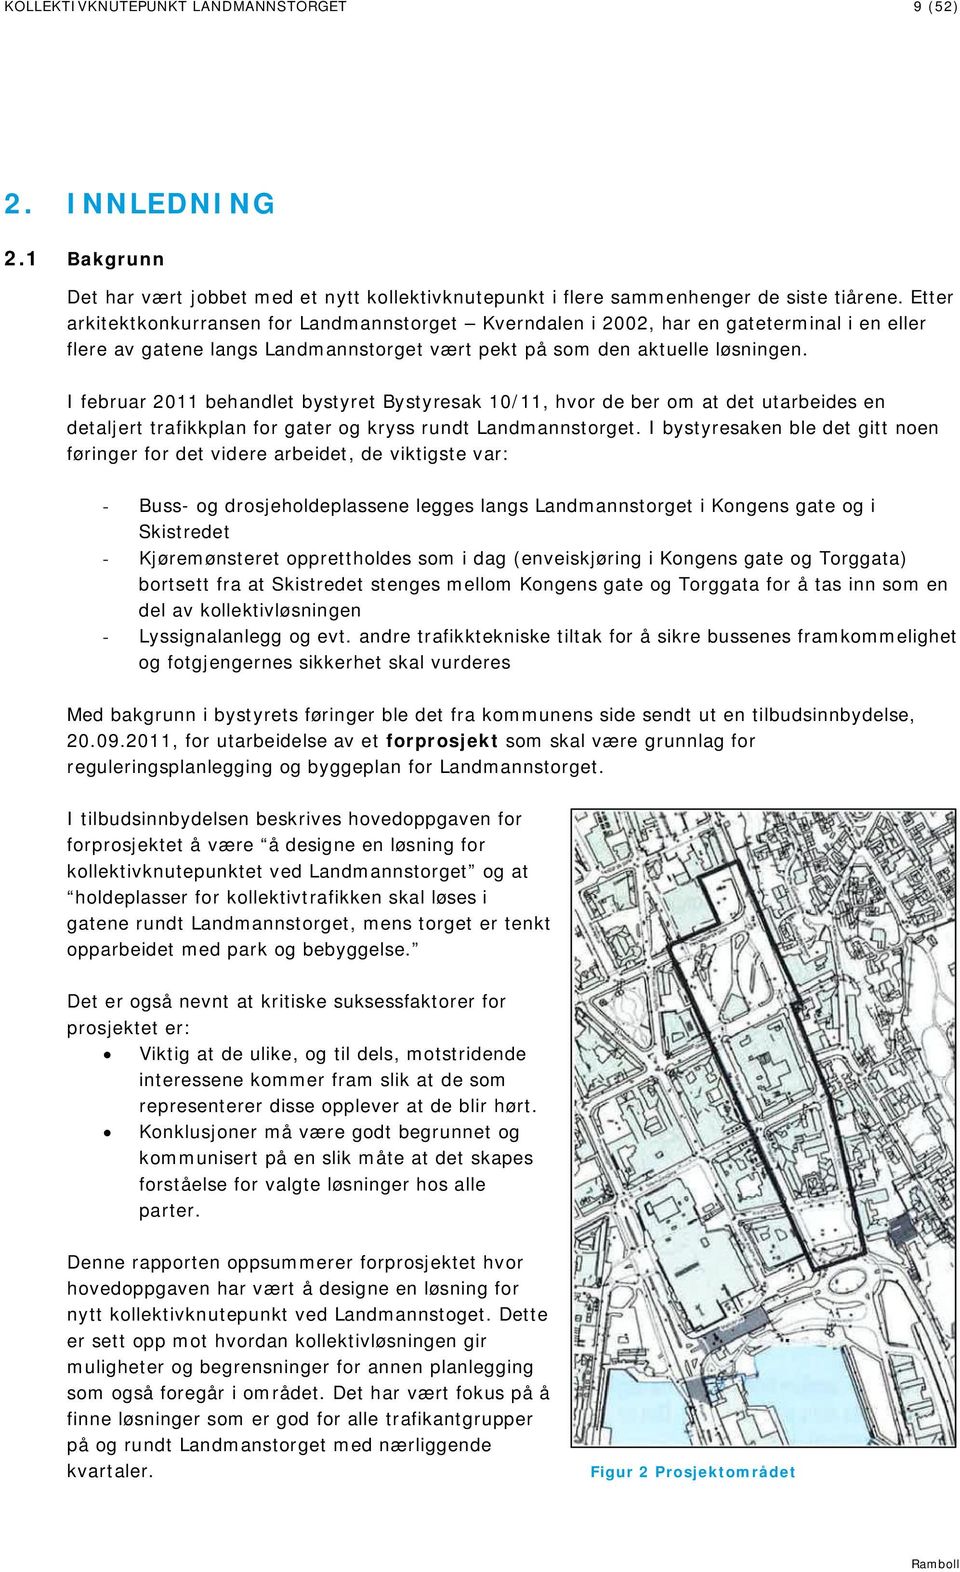 I februar 2011 behandlet bystyret Bystyresak 10/11, hvor de ber om at det utarbeides en detaljert trafikkplan for gater og kryss rundt Landmannstorget.